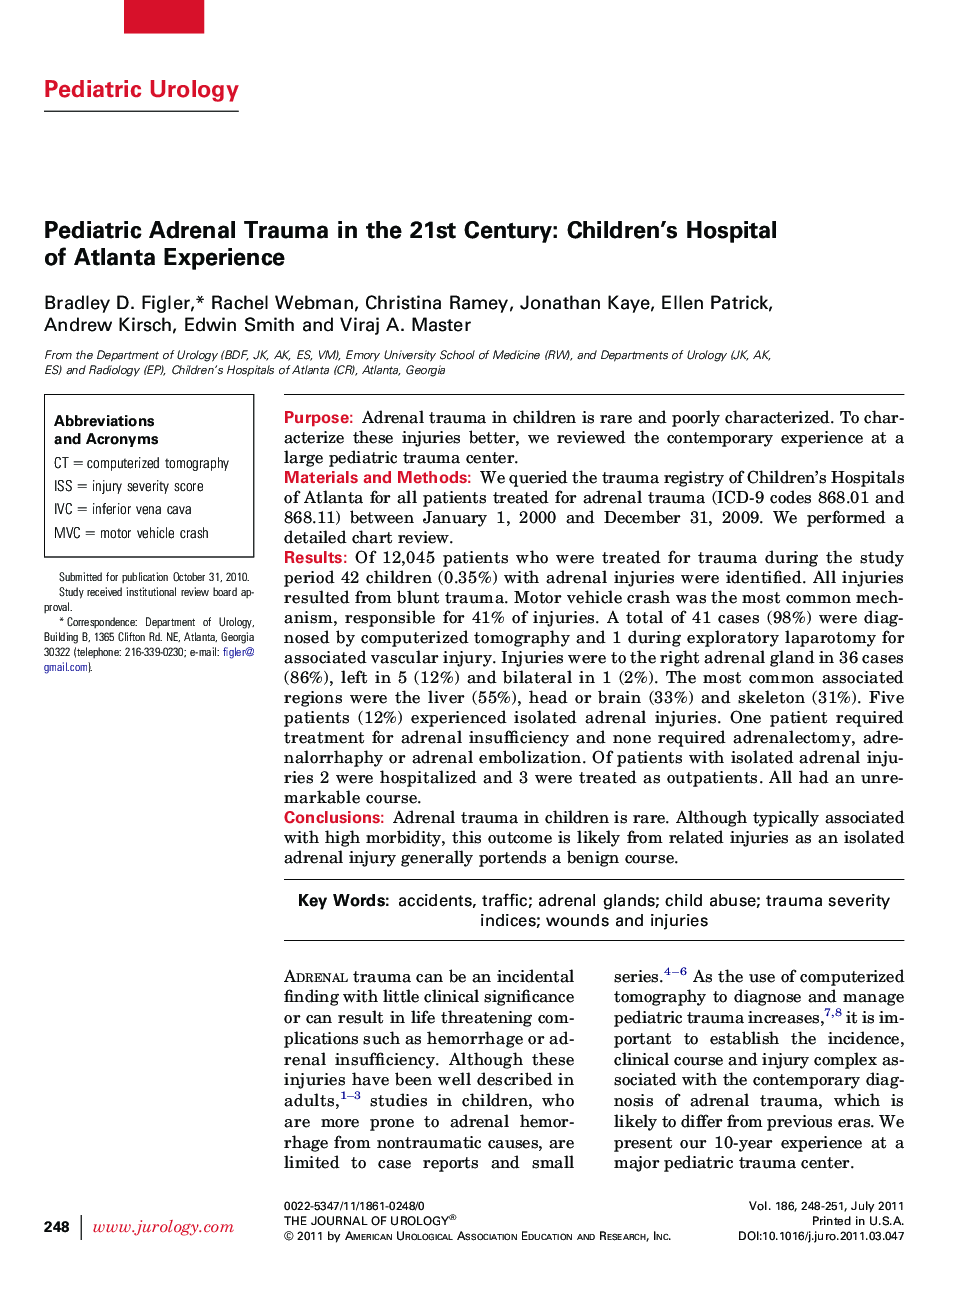 Pediatric Adrenal Trauma in the 21st Century: Children's Hospital of Atlanta Experience